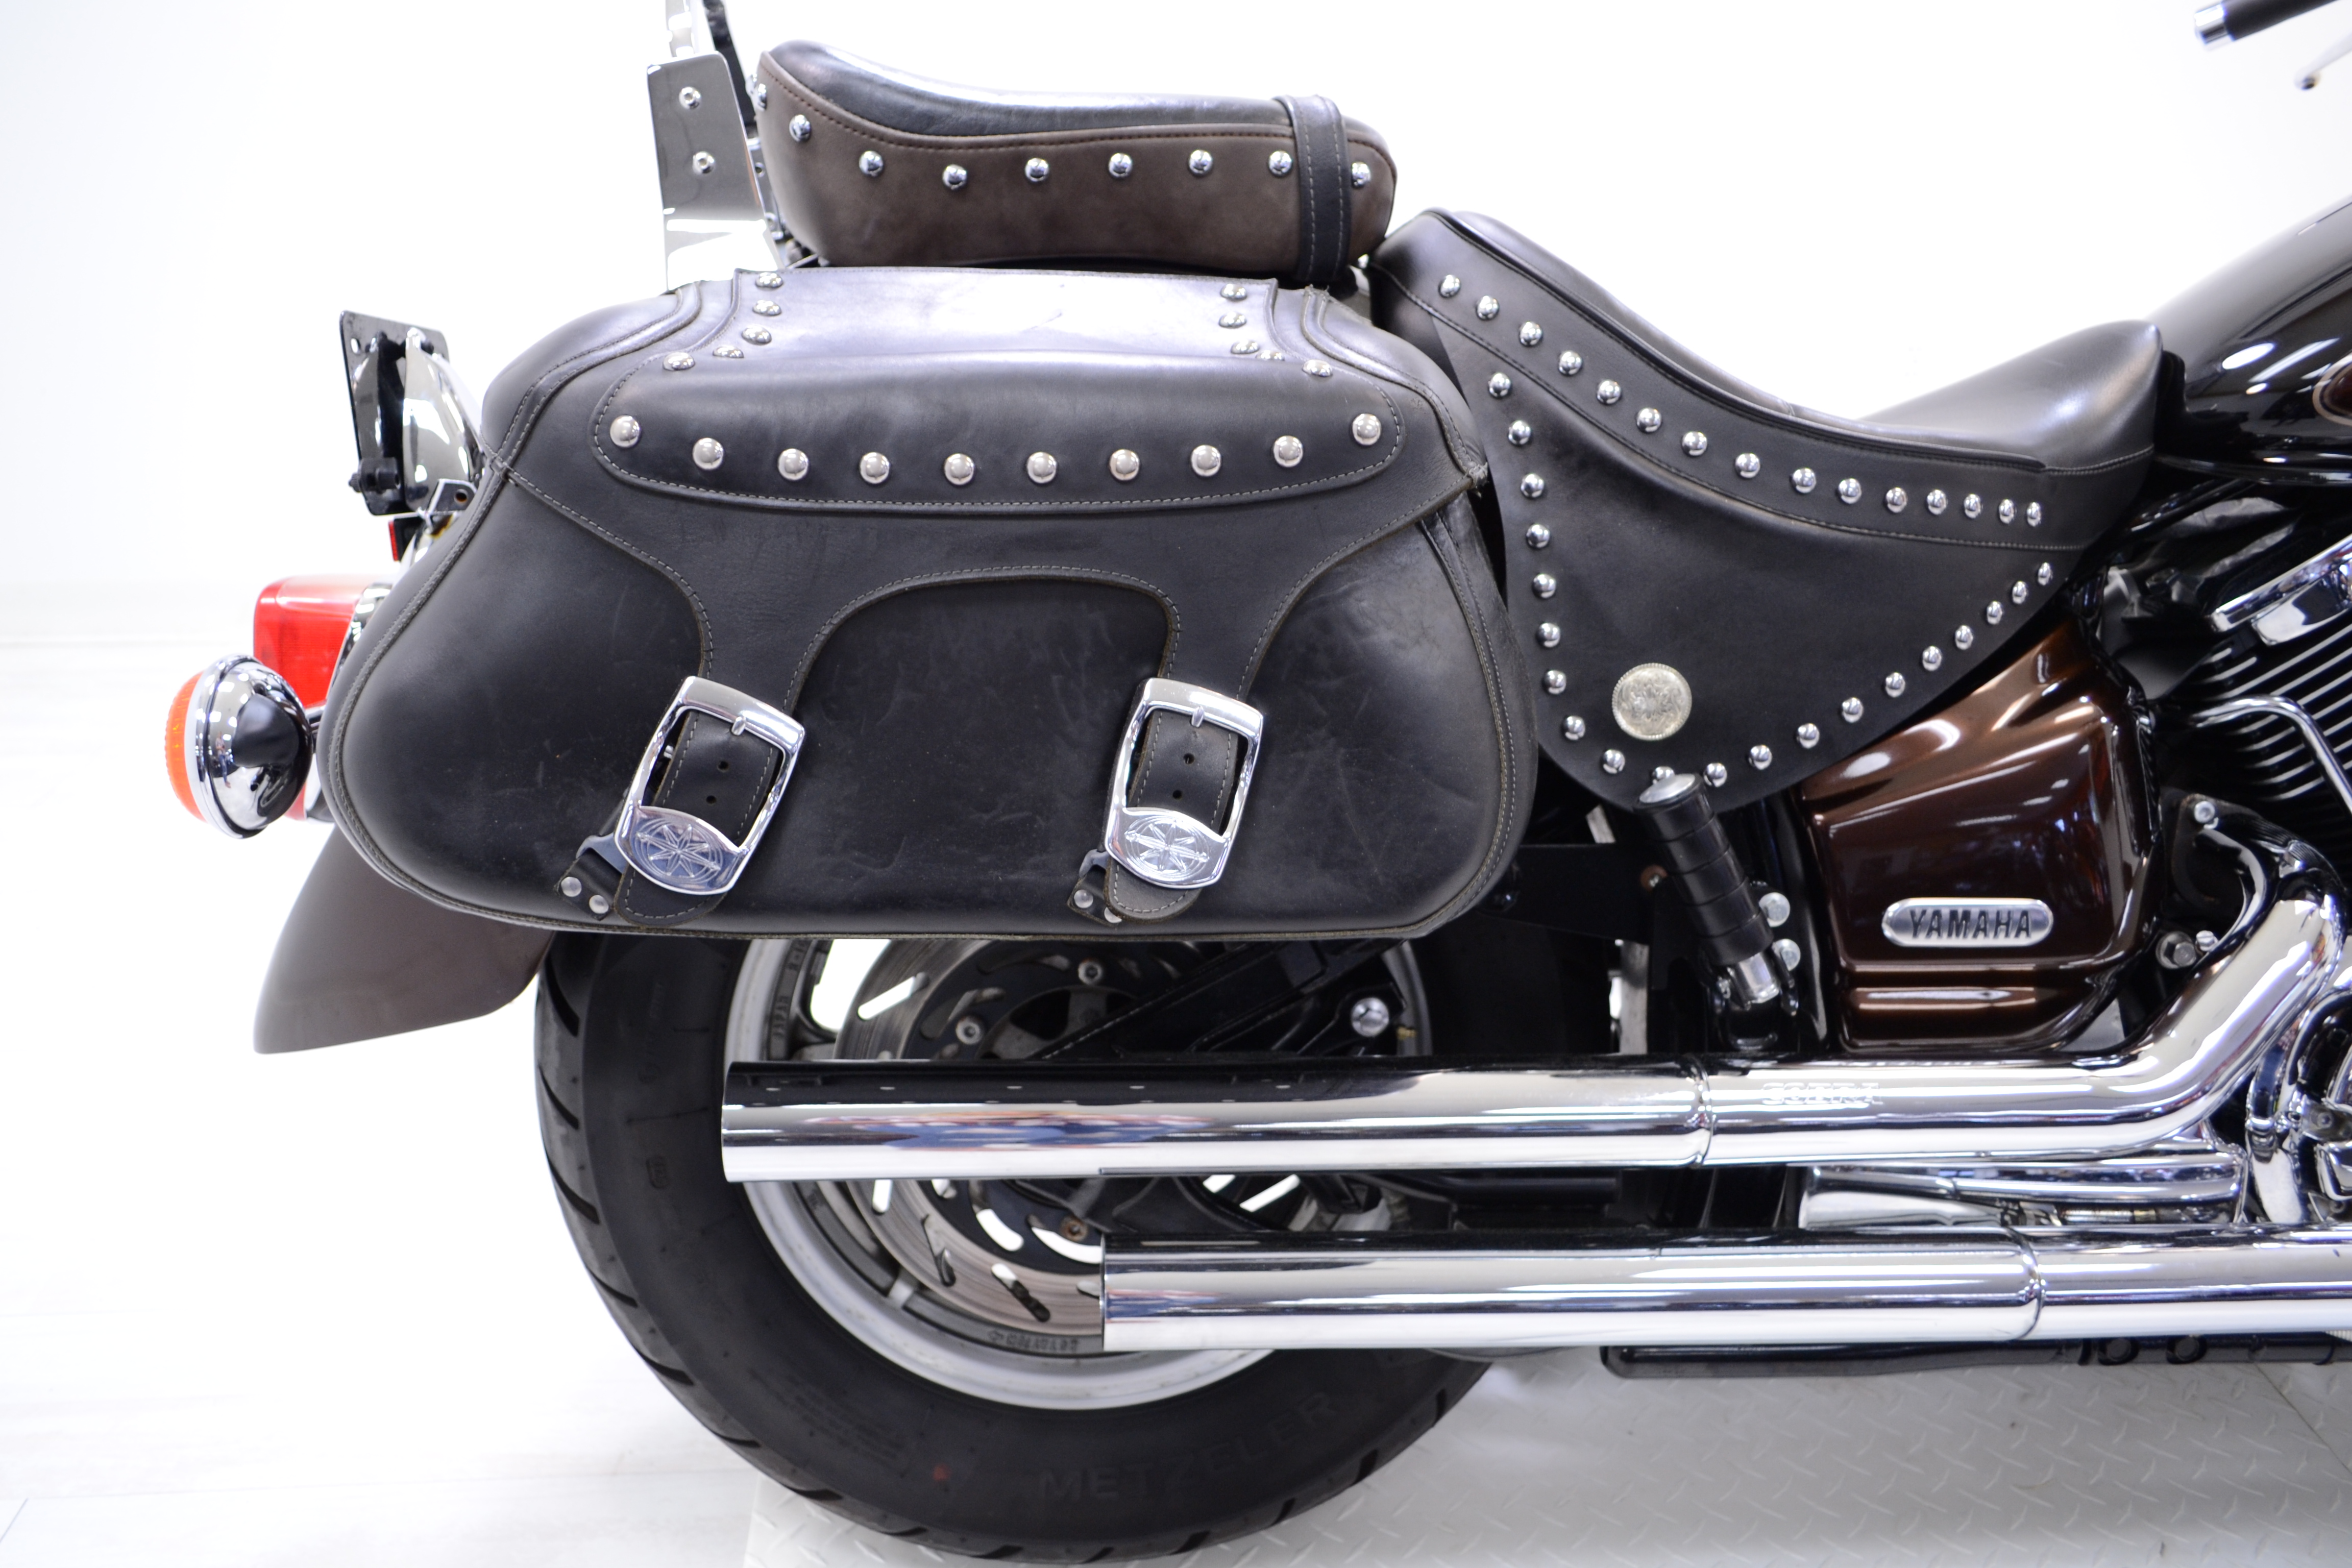 Обзор yamaha xvs 950 midnight star (v-star 950): технические характеристики мотоцикла